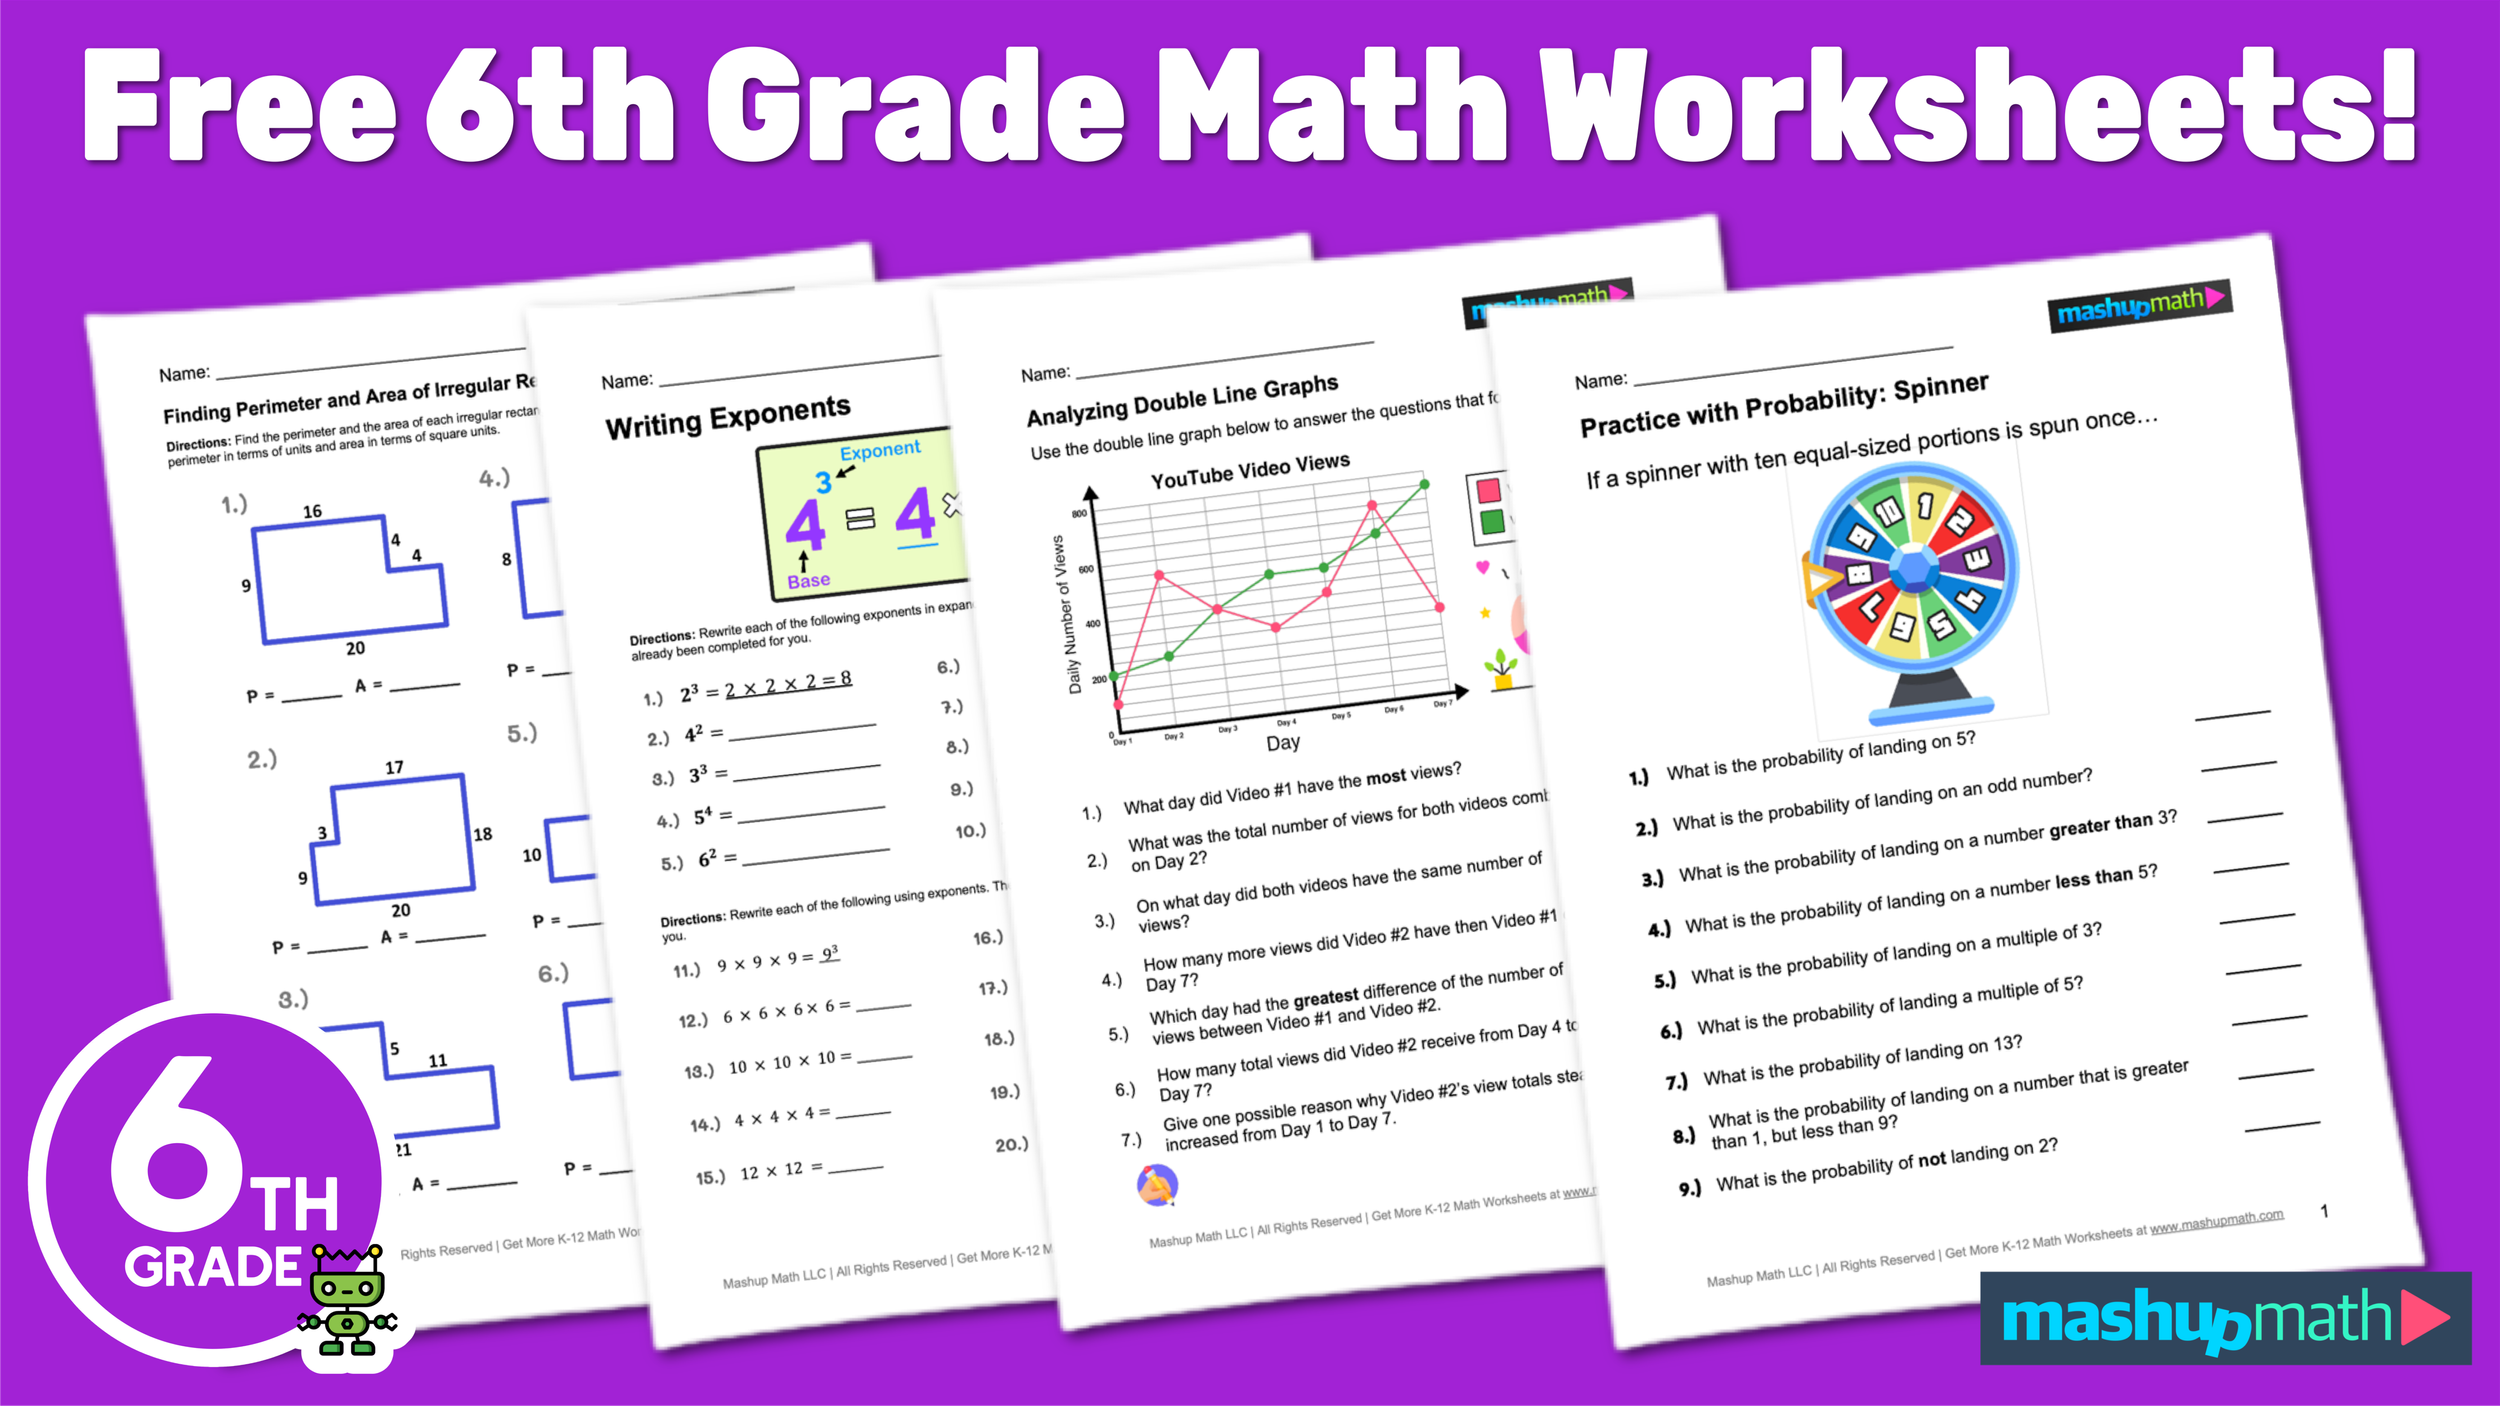 6th-Grade-Math-Worksheets-Banner.png